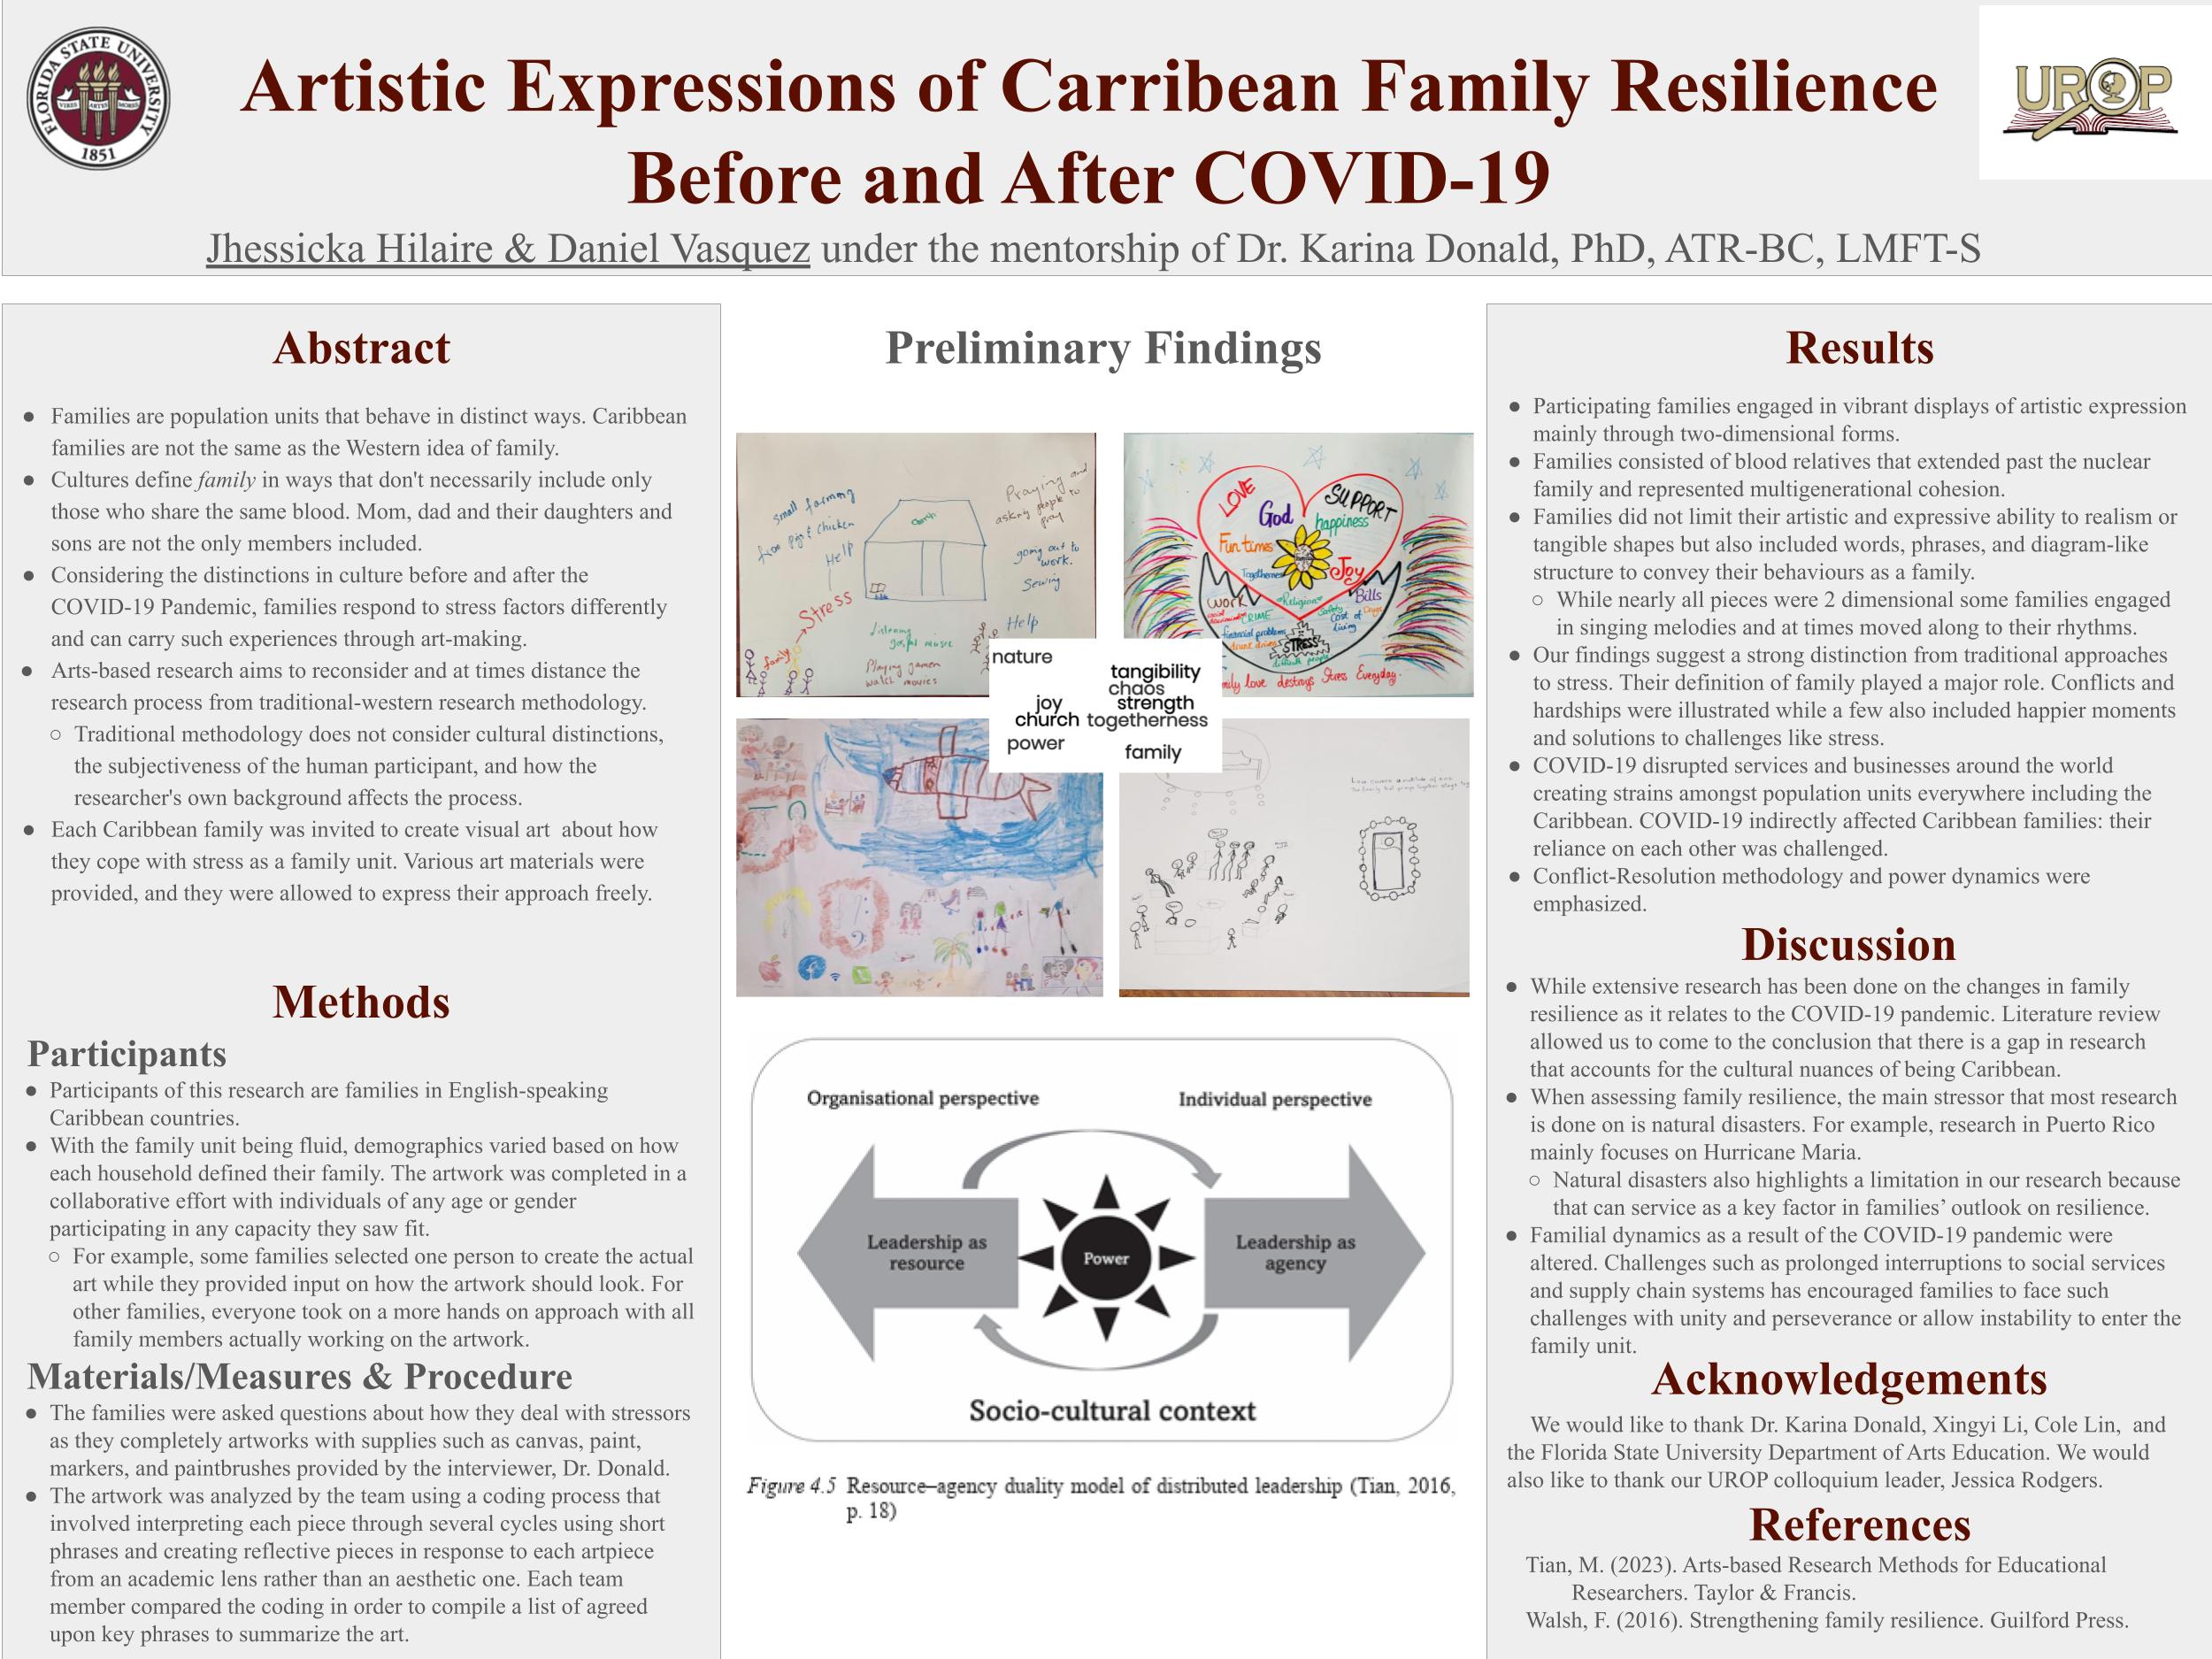 UROP_ Caribbean Family Resilience through Art-Making (Poster Screenshot).jpg